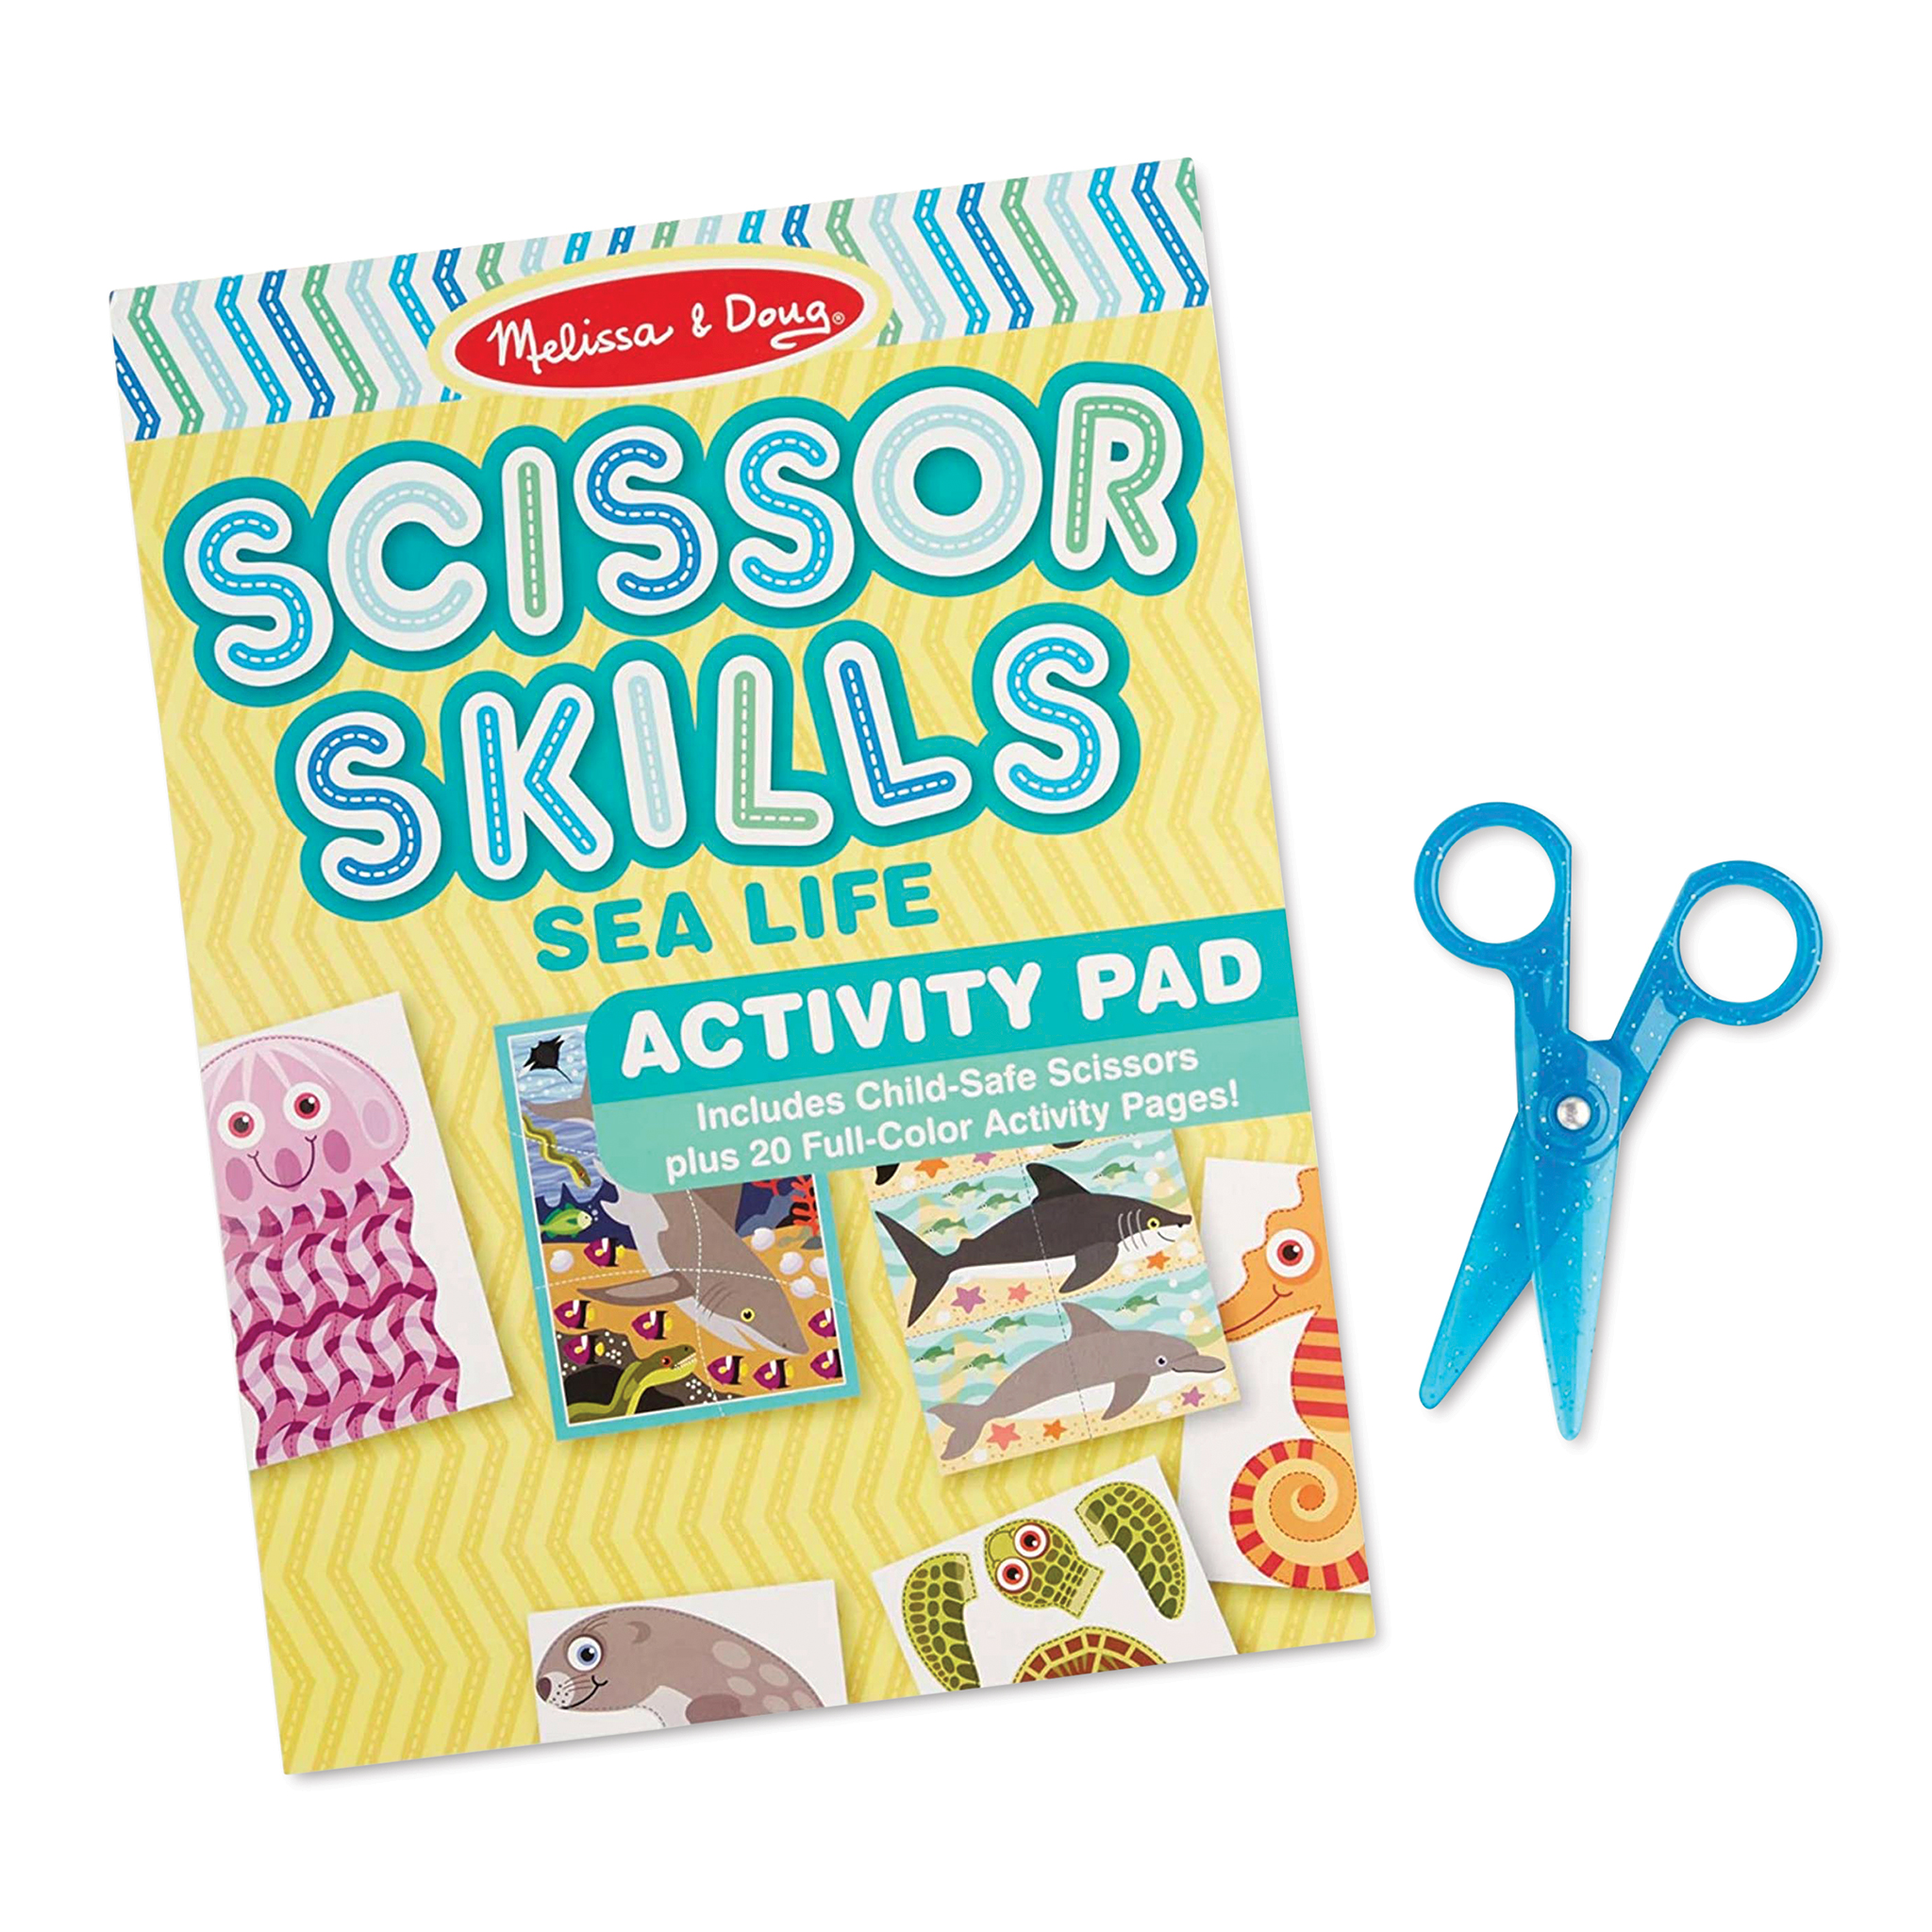 Melissa & Doug Scissor Skills Activity Pad - Games and Shapes